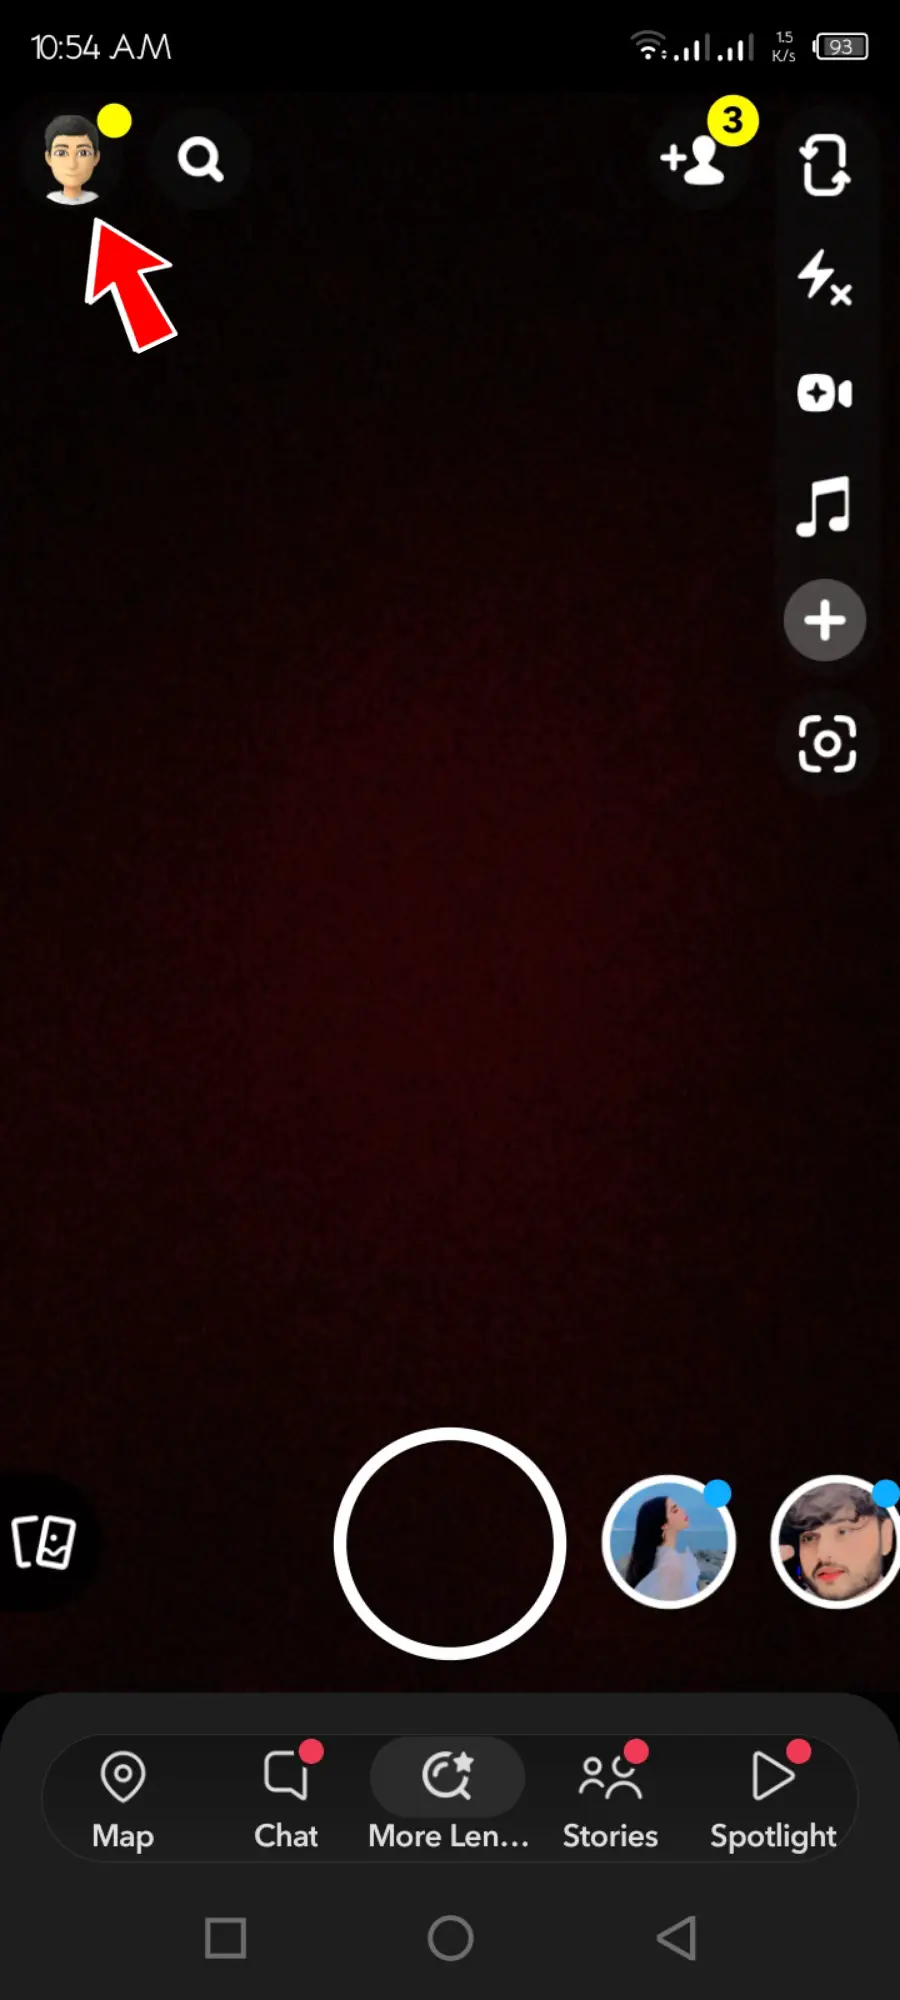 Access Snapchat Settings